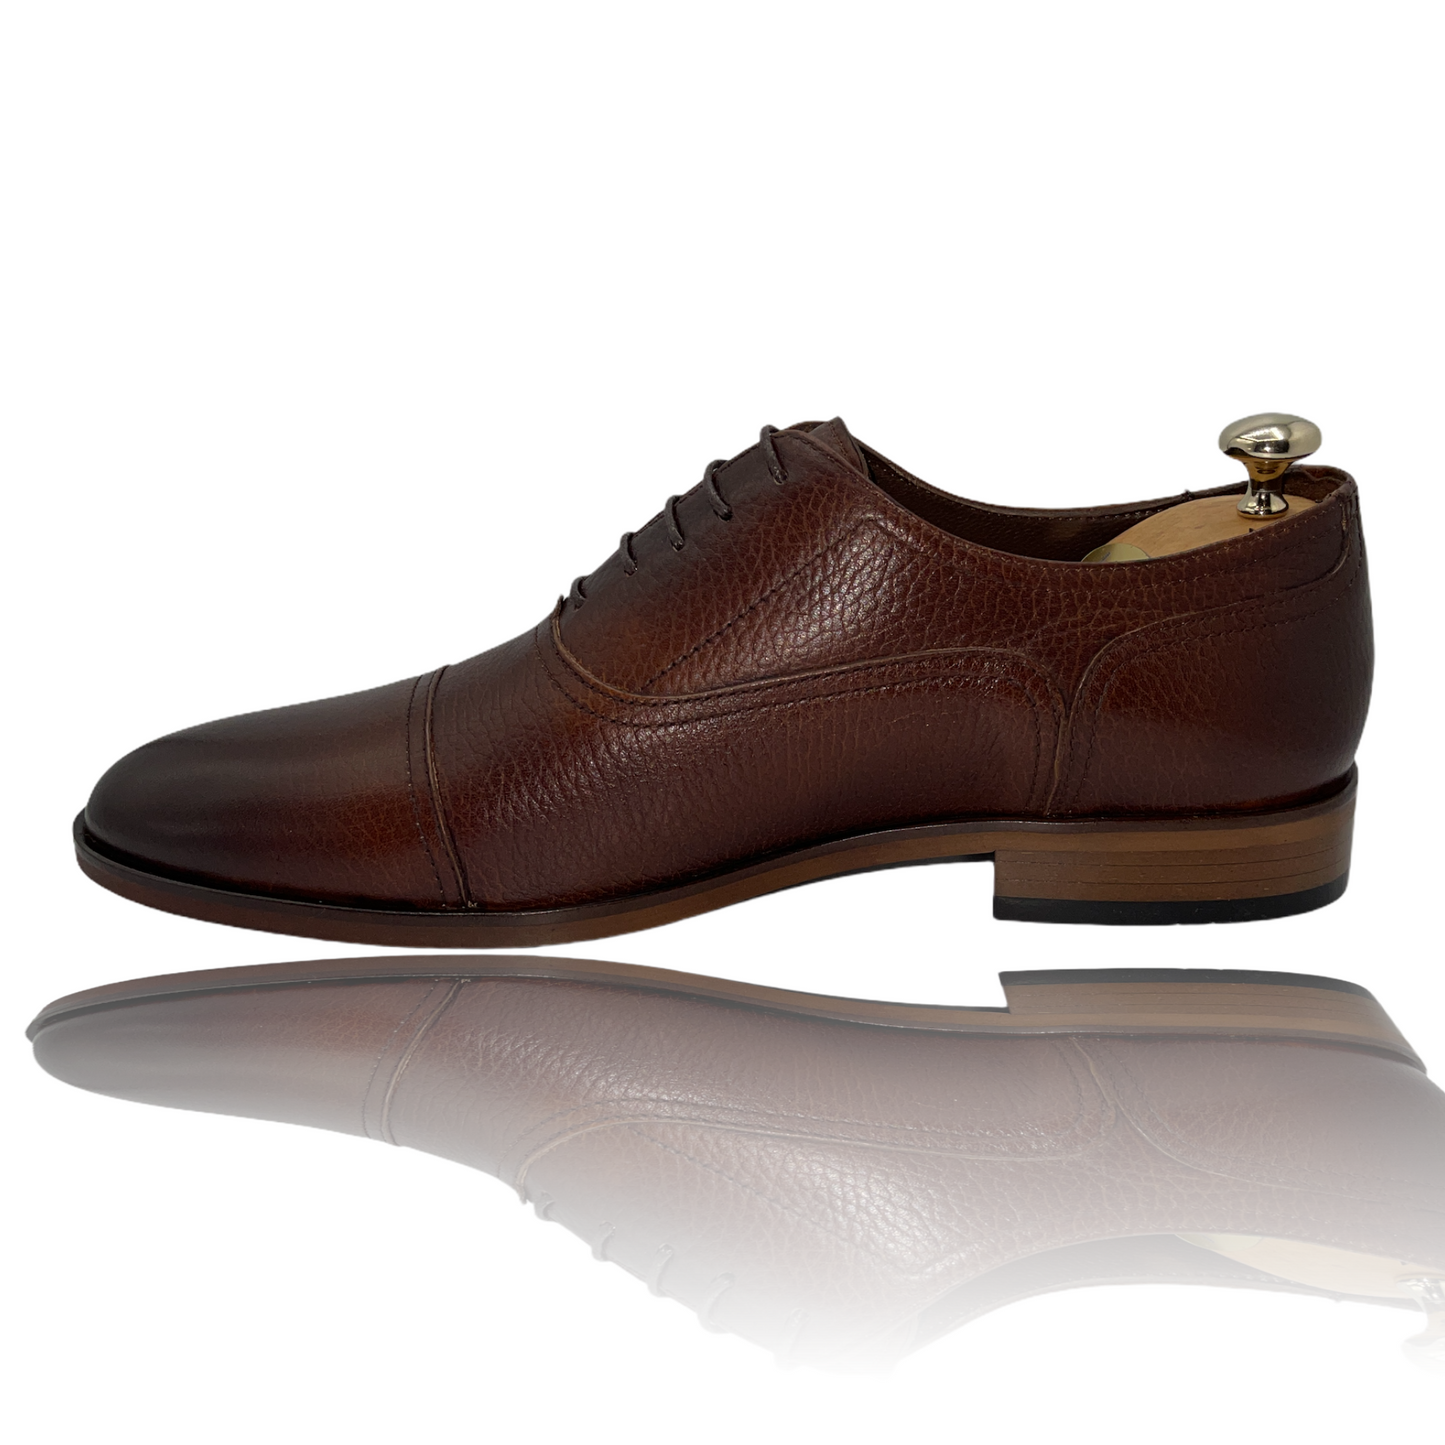 The Largo Brown Leather Cap Toe Oxford Shoe Final Sale!